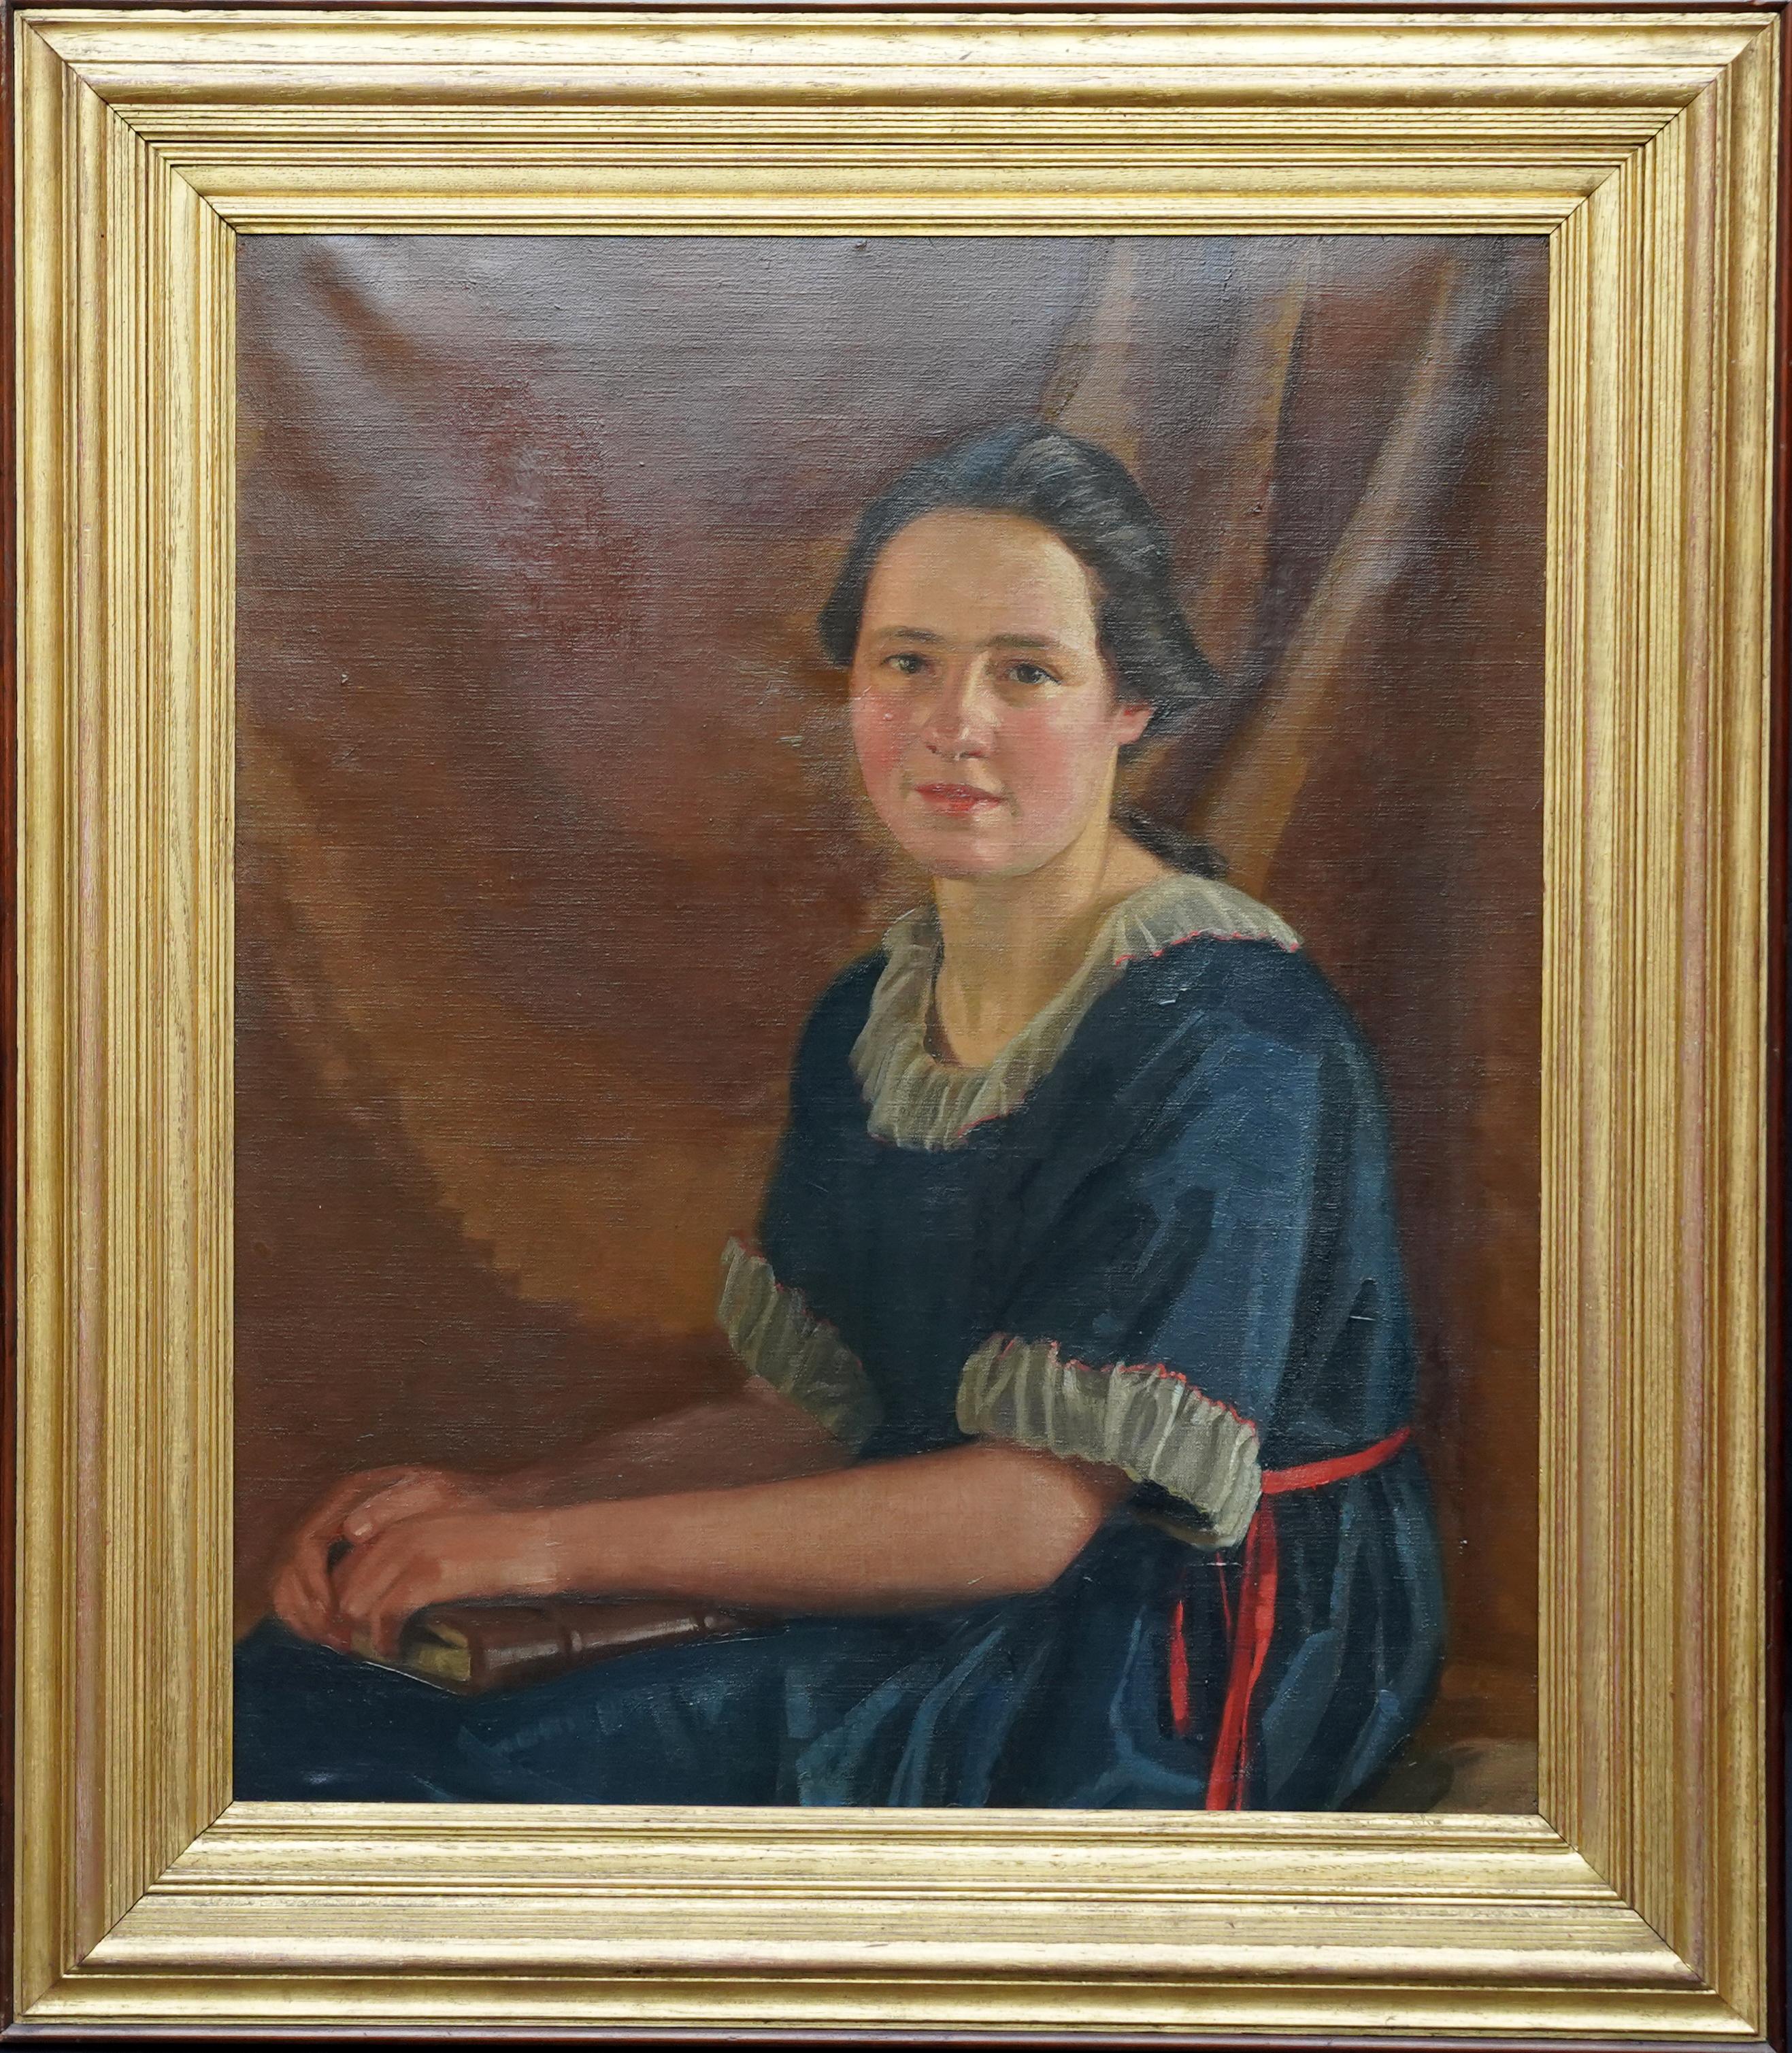 James P. Barraclough Portrait Painting - Portrait of a Young Woman with Book - British Art Deco 20s portrait oil painting